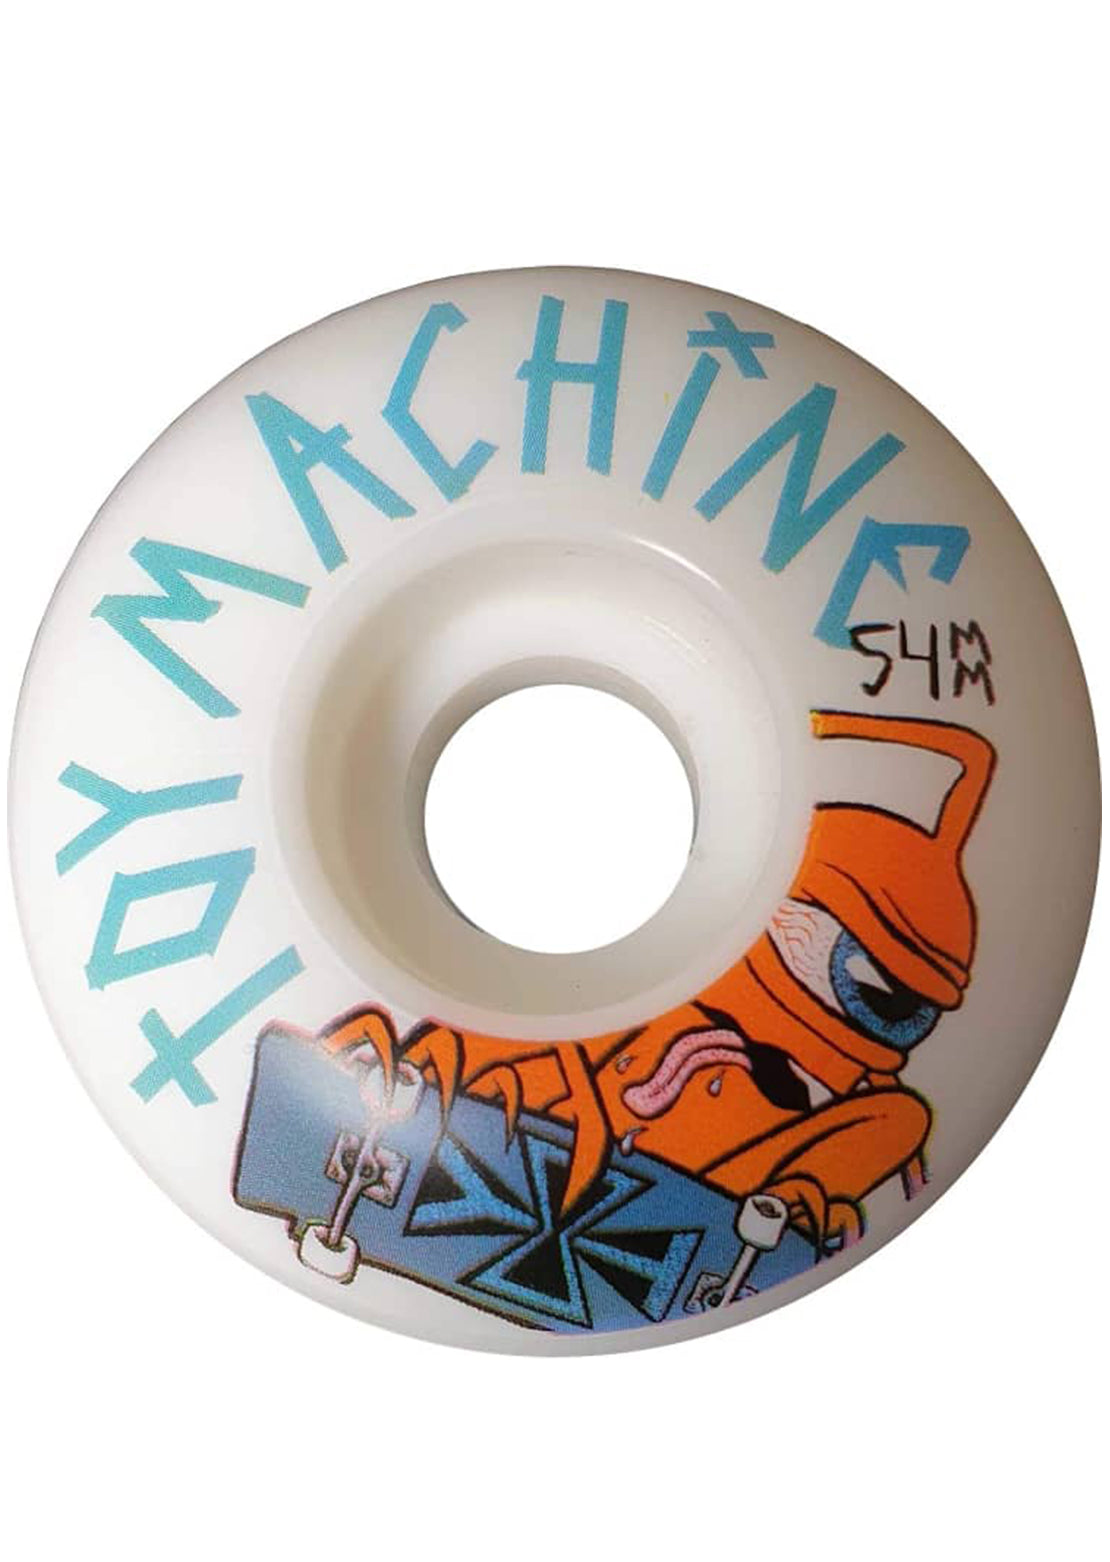 Toy Machine Sect Skater Skateboard Wheels 54 mm